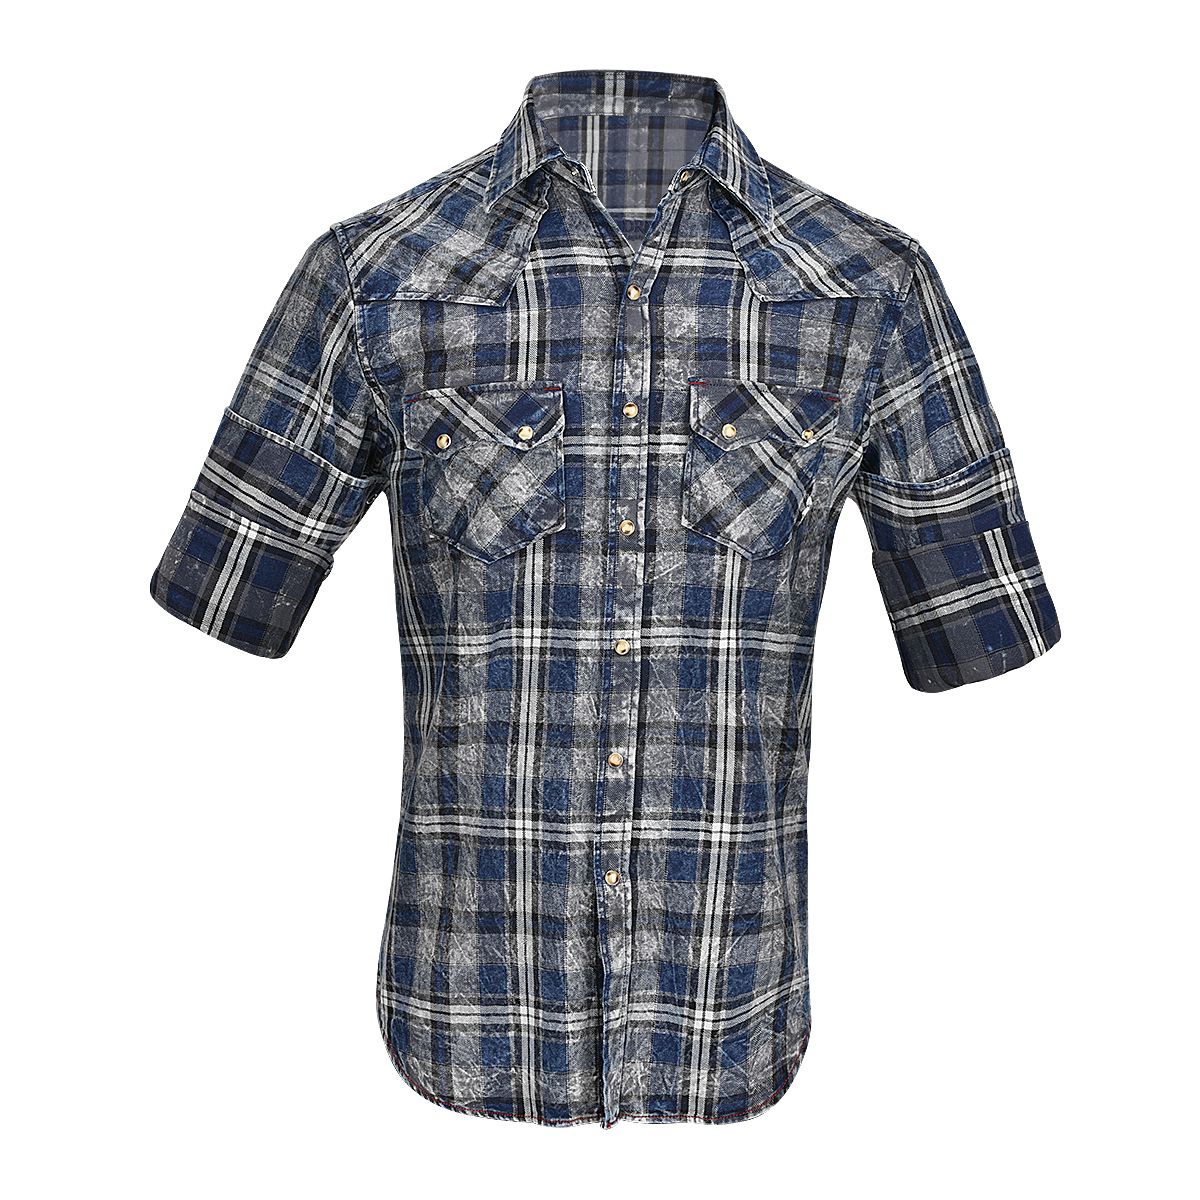 CMRJ455 - Cuadra navy cowboy fashion cotton shirt for men-Kuet.us